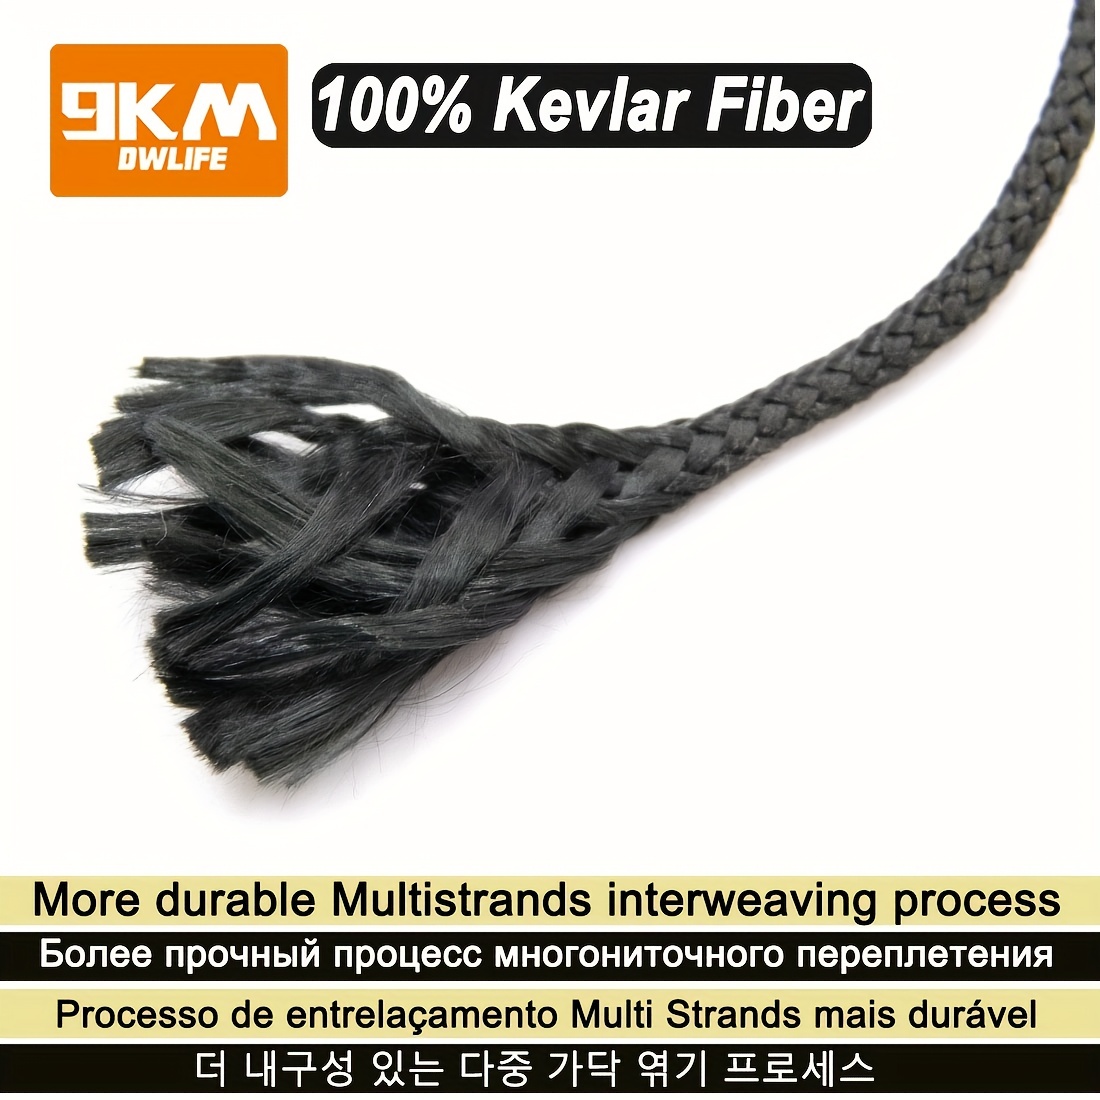 9KM DWLIFE Kevlar Kite String, 300lb 500Ft, Braided India